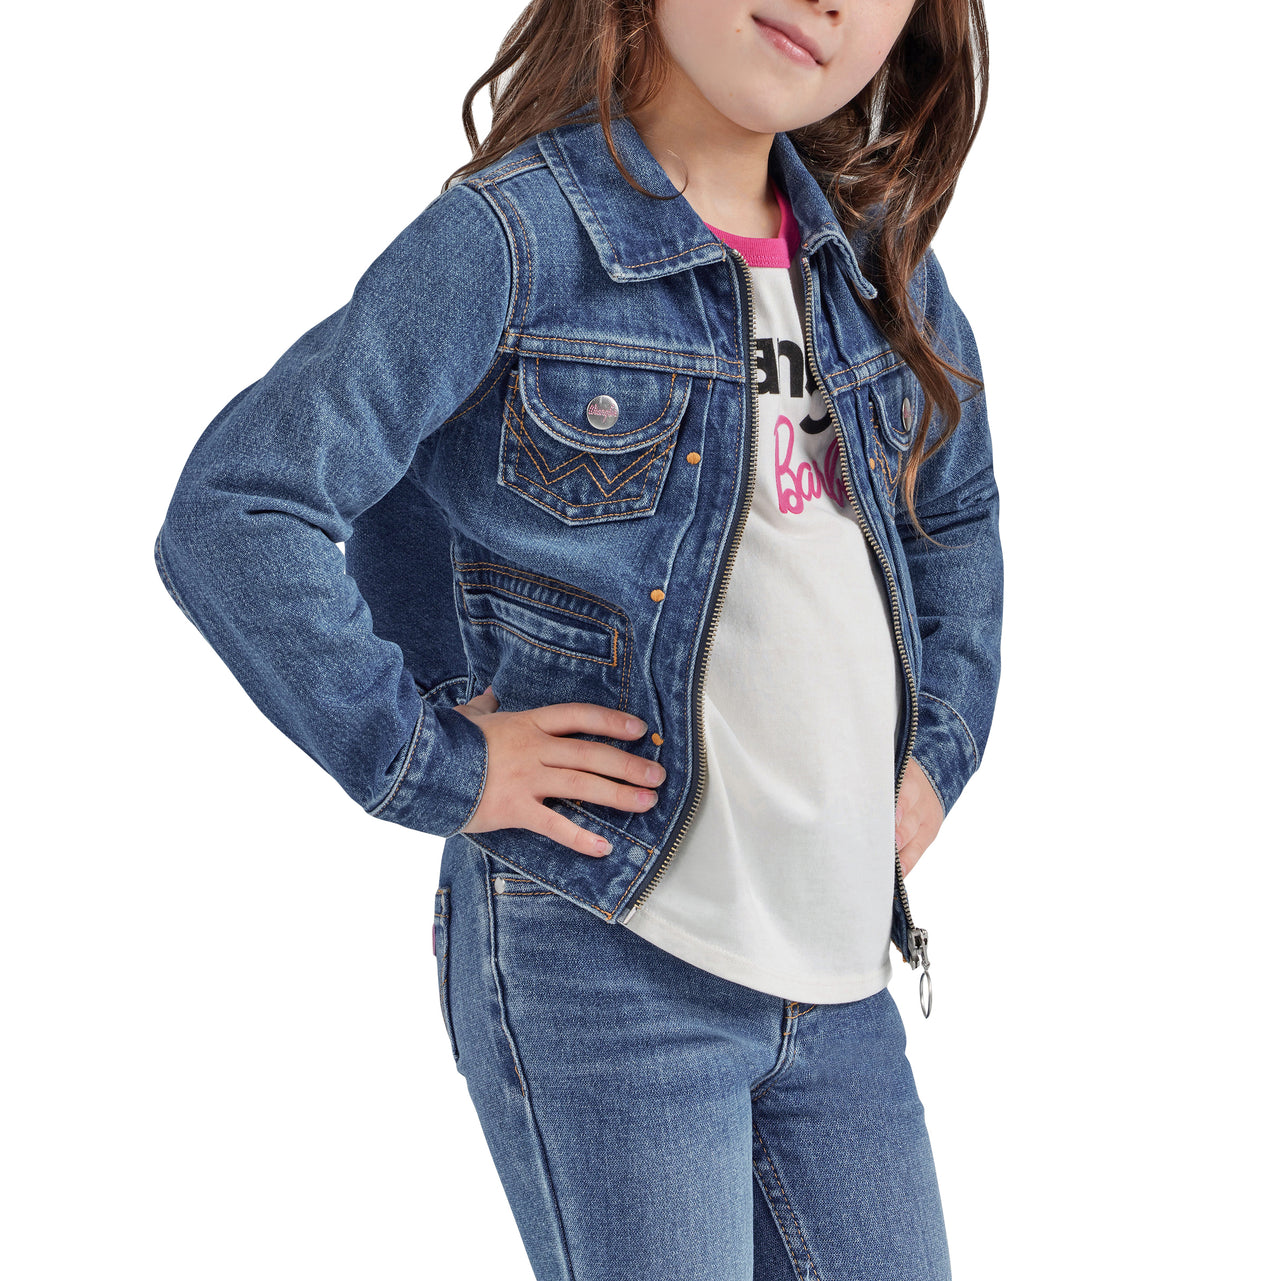 Wrangler X Barbie Girl's Zip Up Denim Jacket - Medium Wash